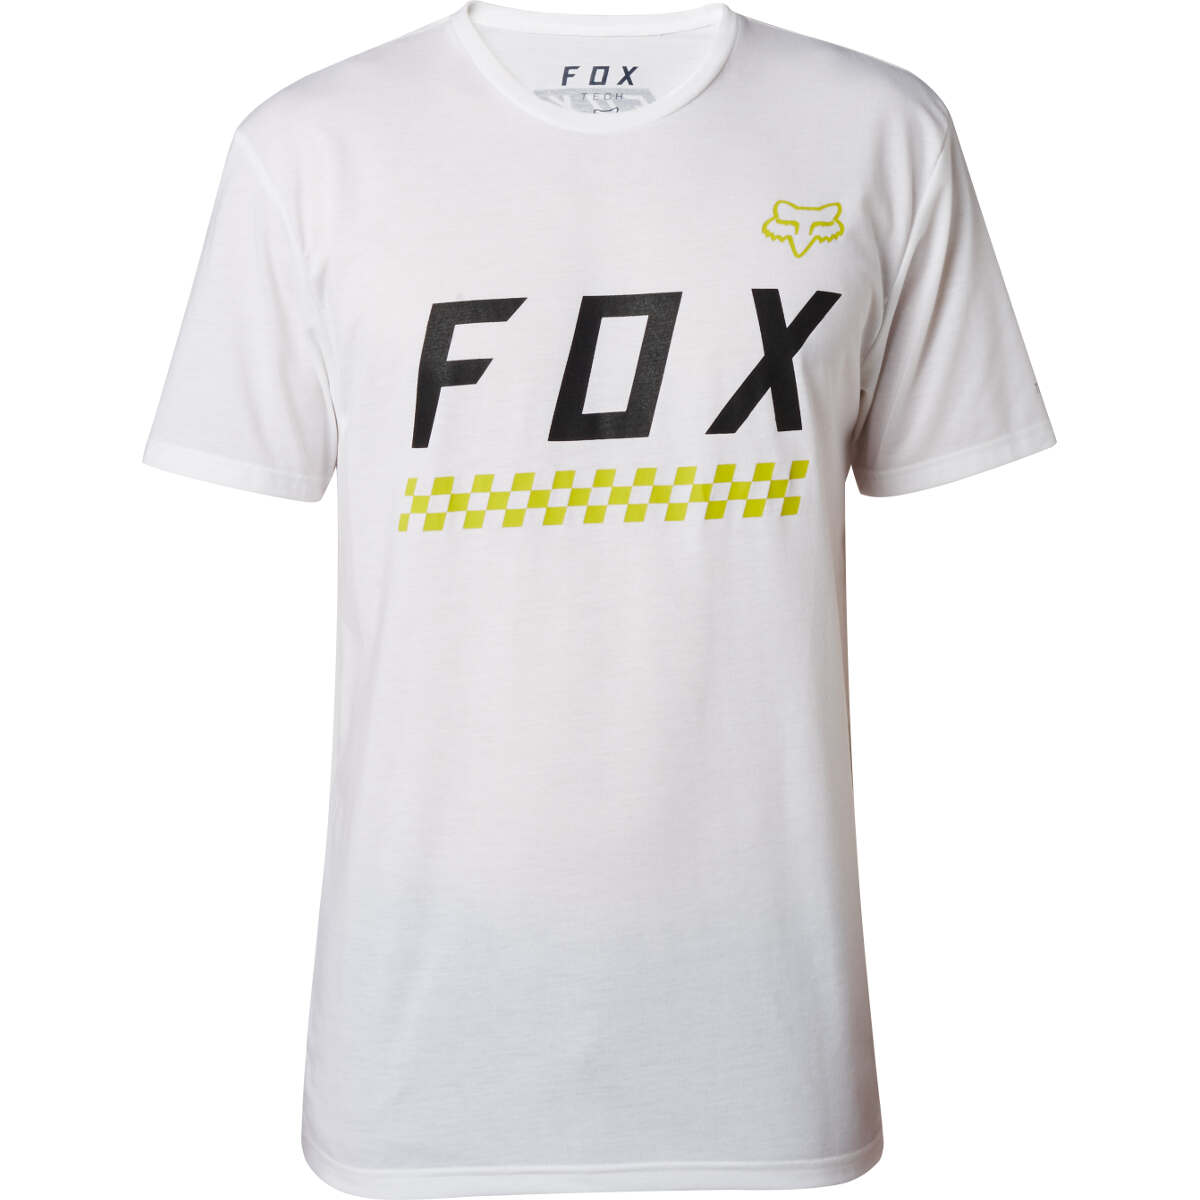 Fox Tech T-Shirt Full Mass Optic White